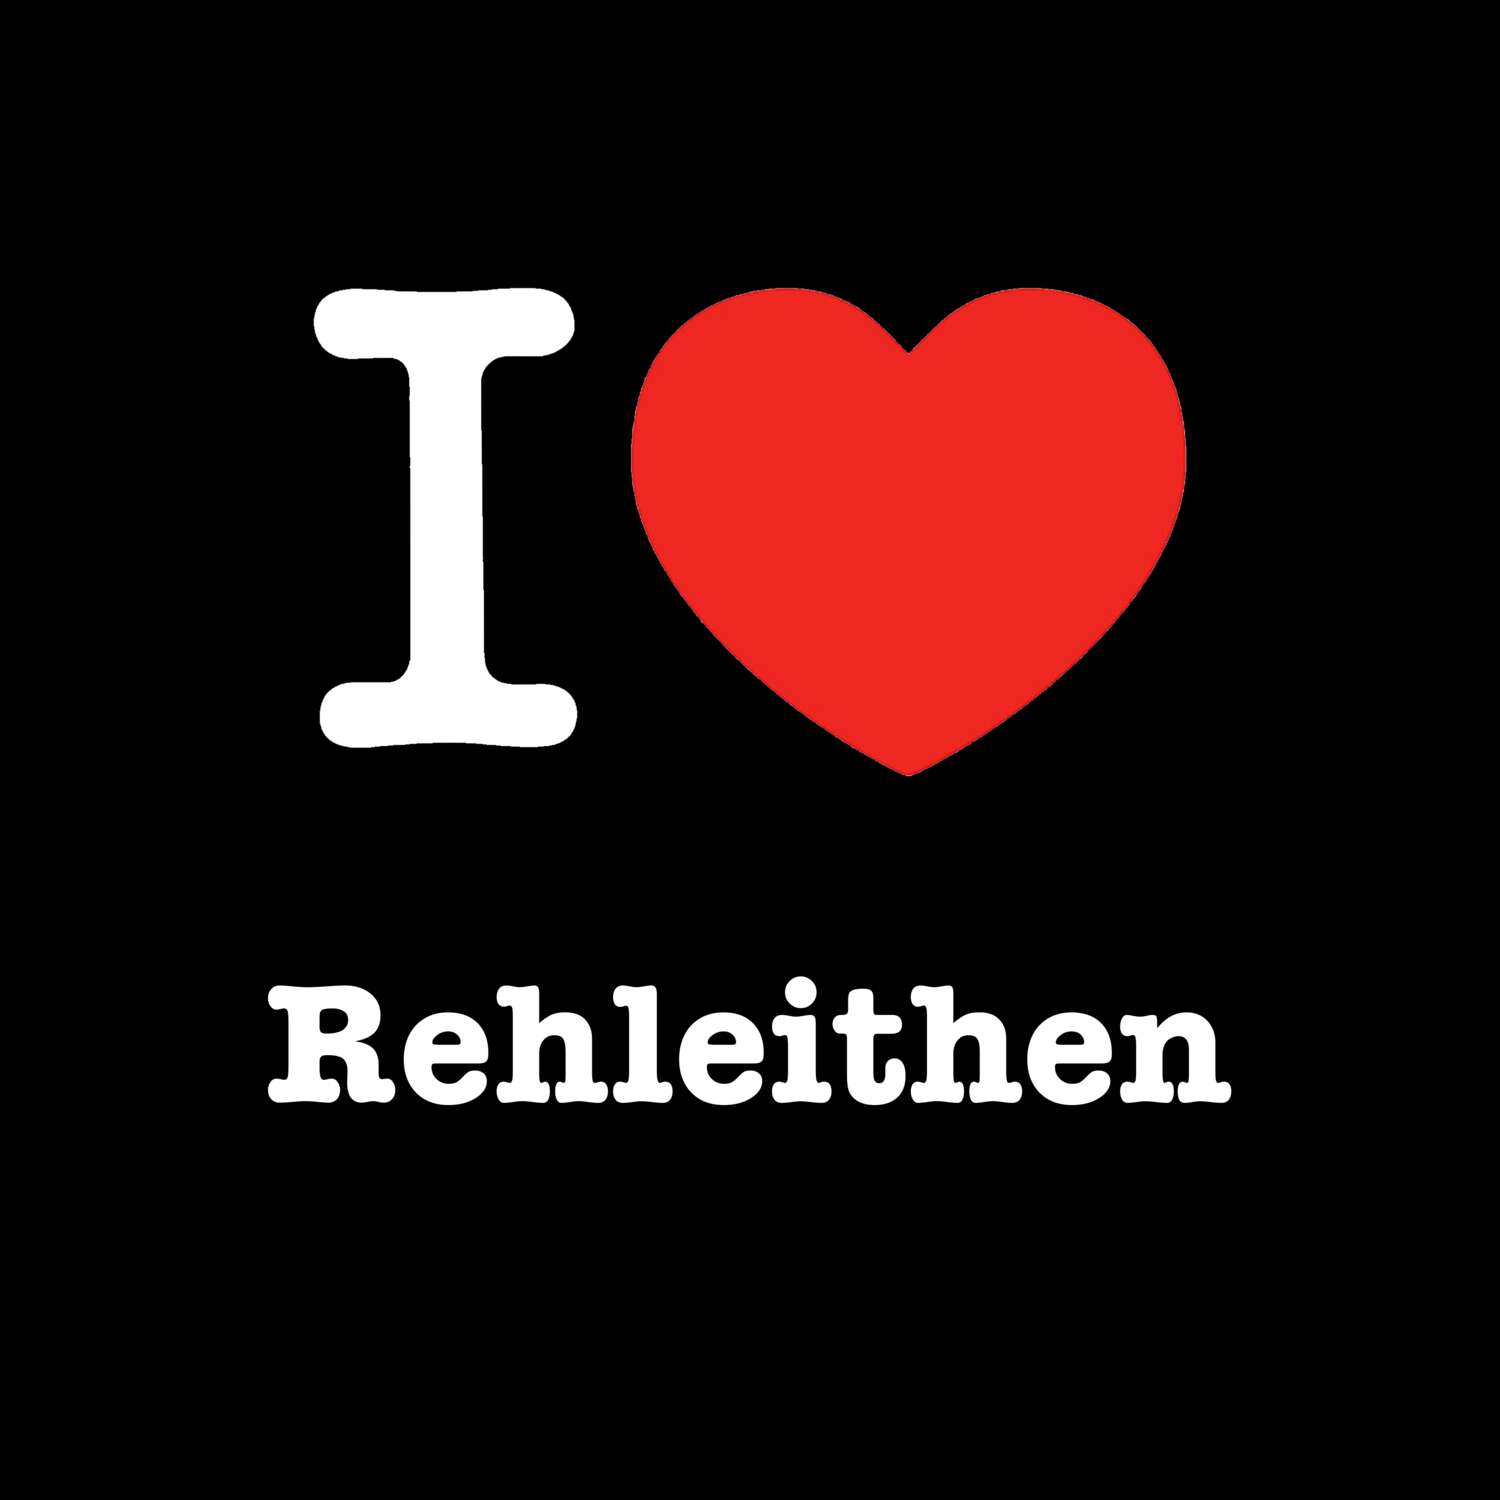 Rehleithen T-Shirt »I love«